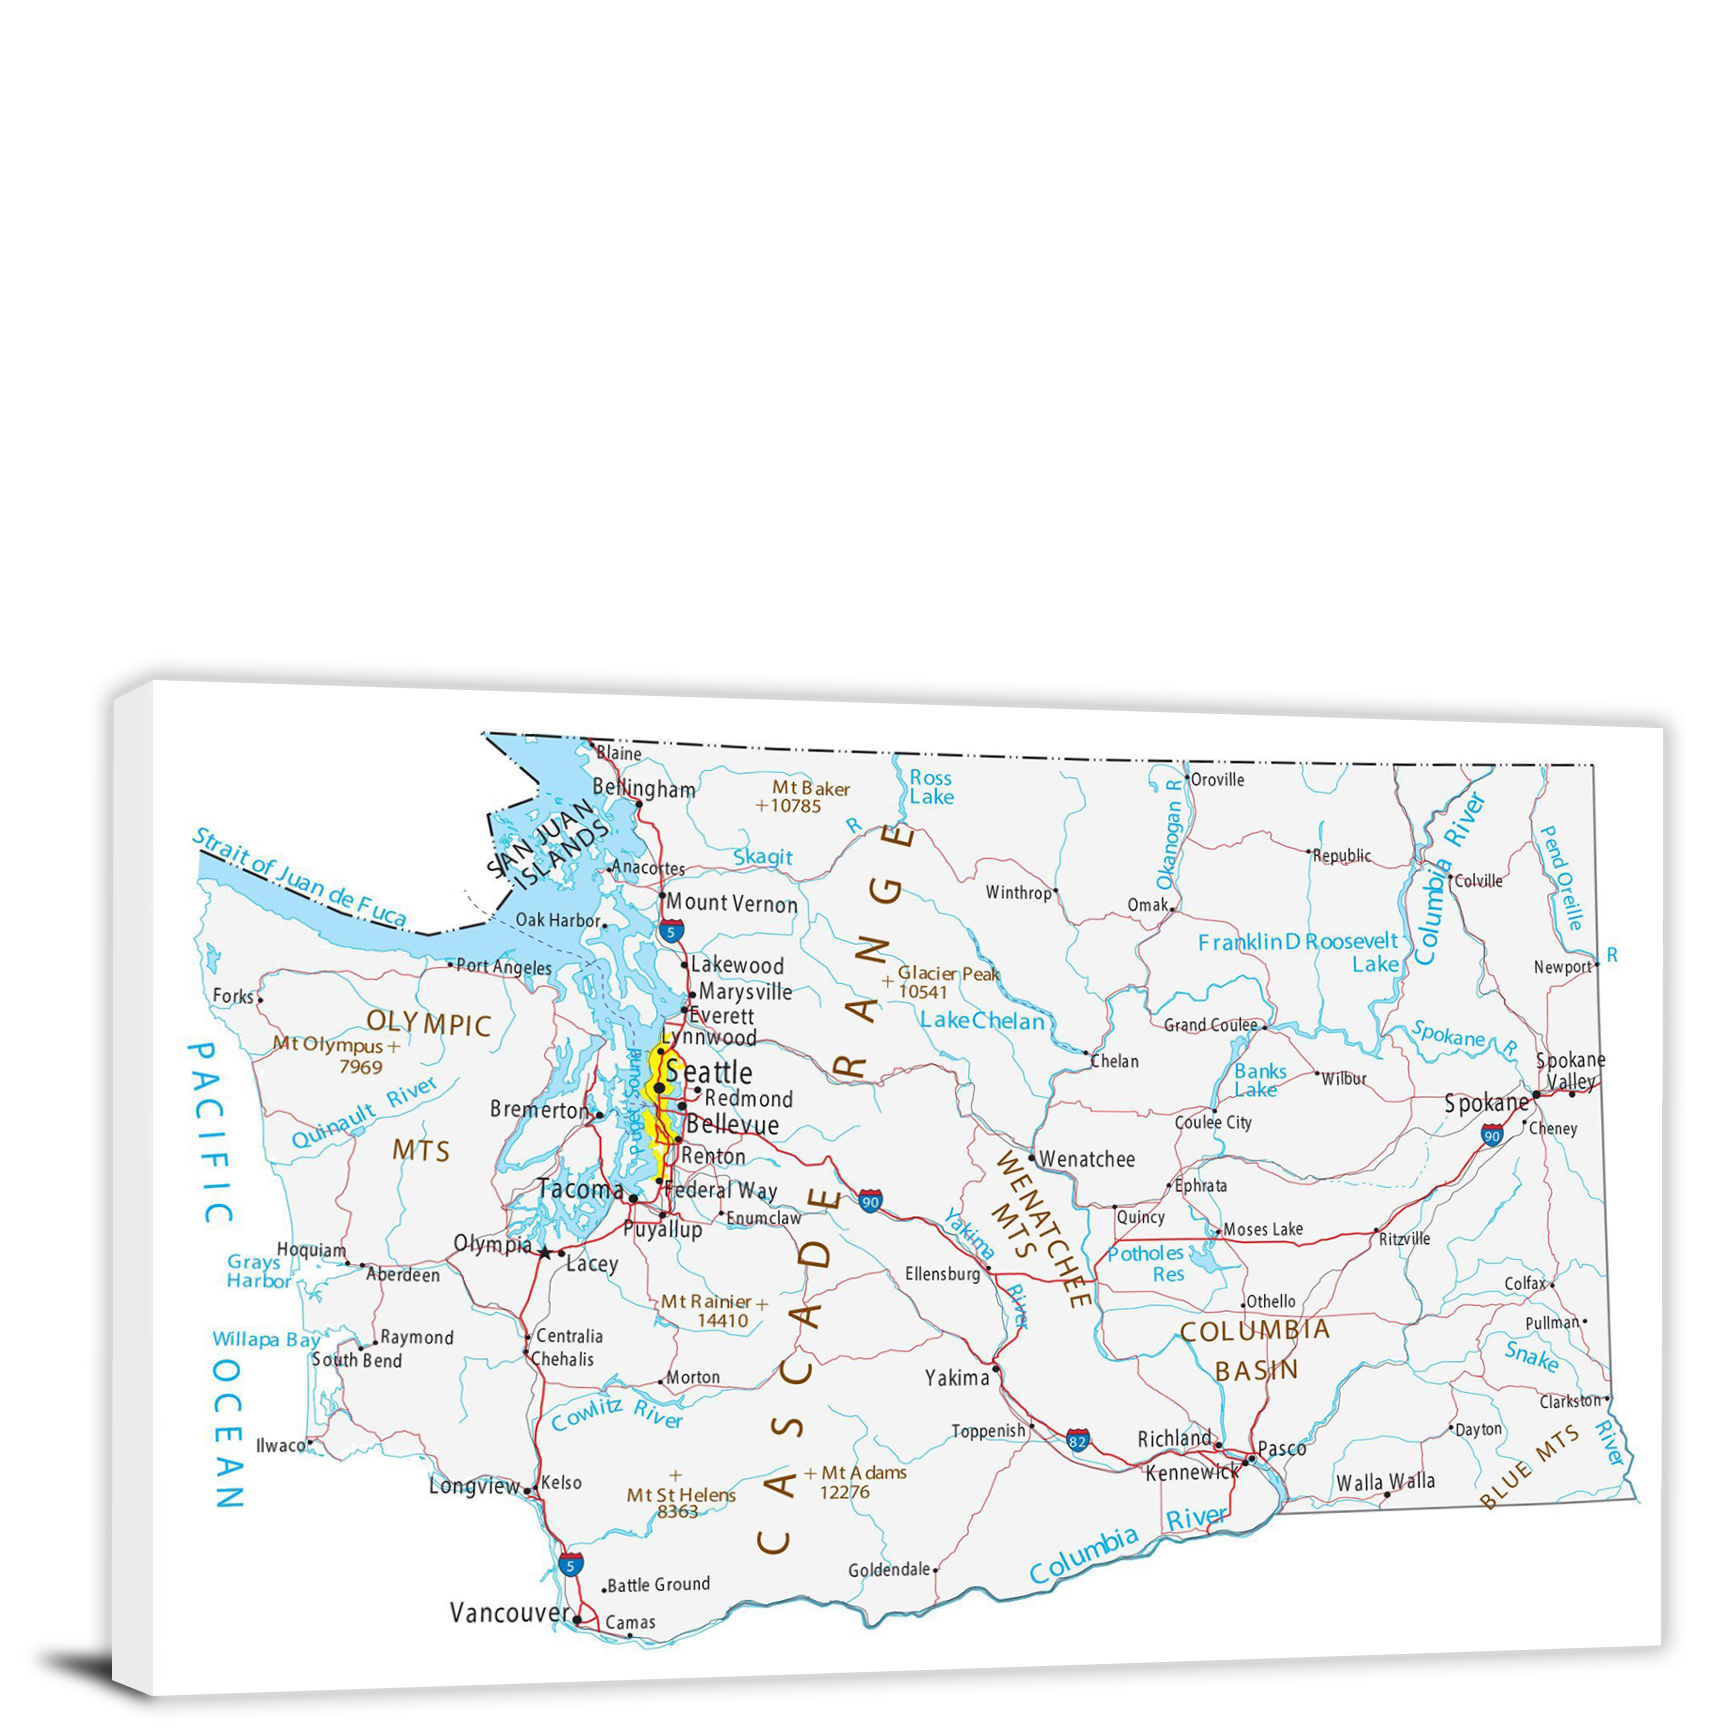 CWA777 Washington Roads And Cities Map 00 